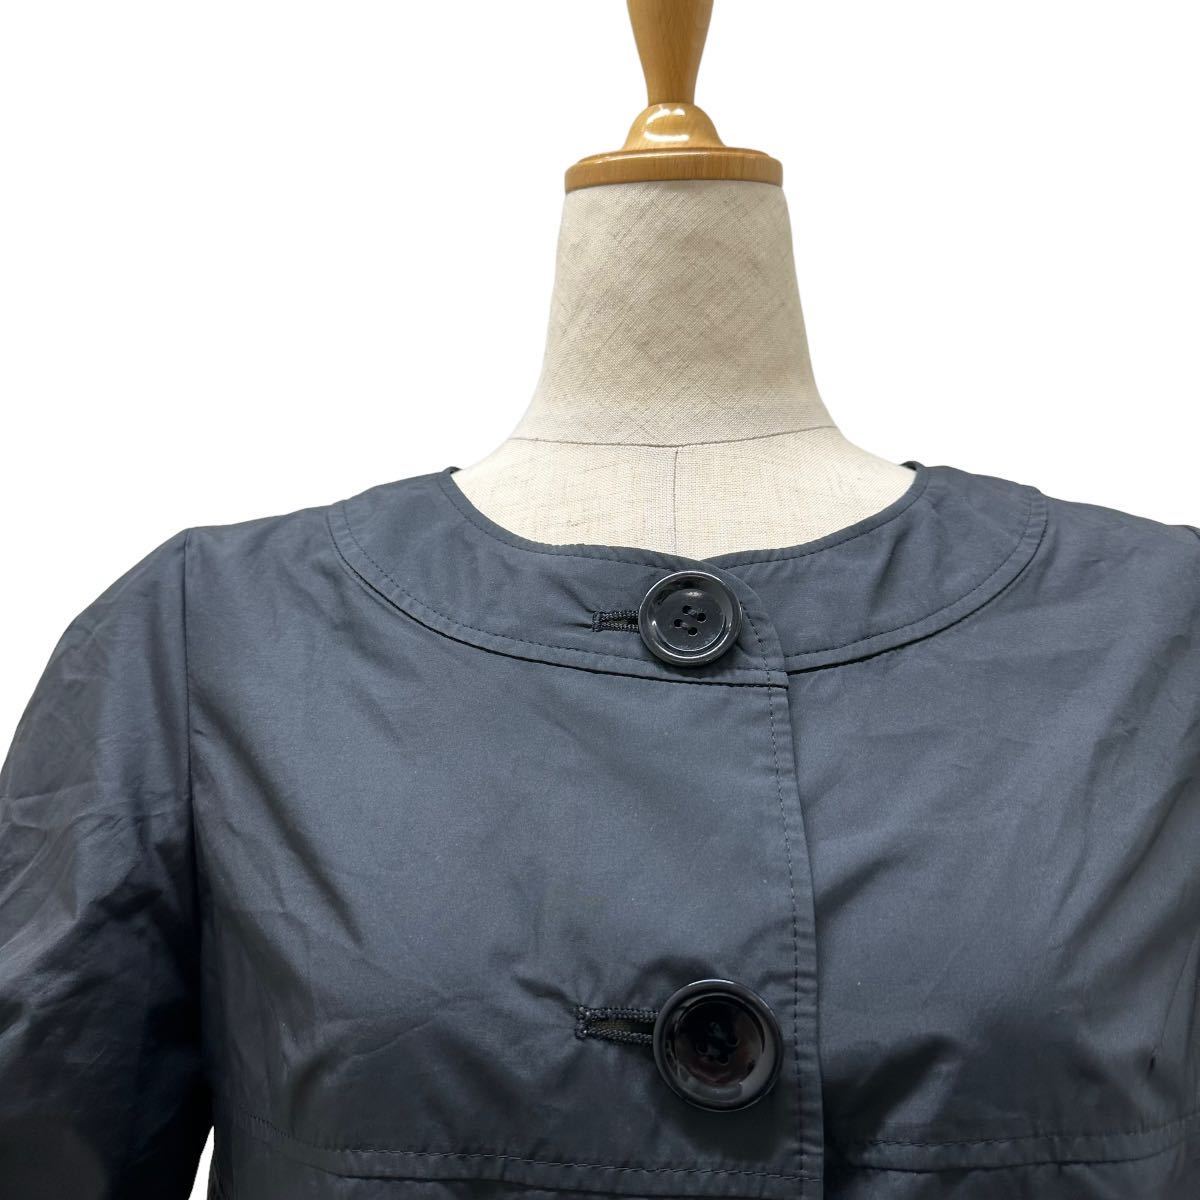 a164N MOGA Moga jacket black size2 no color puff sleeve 